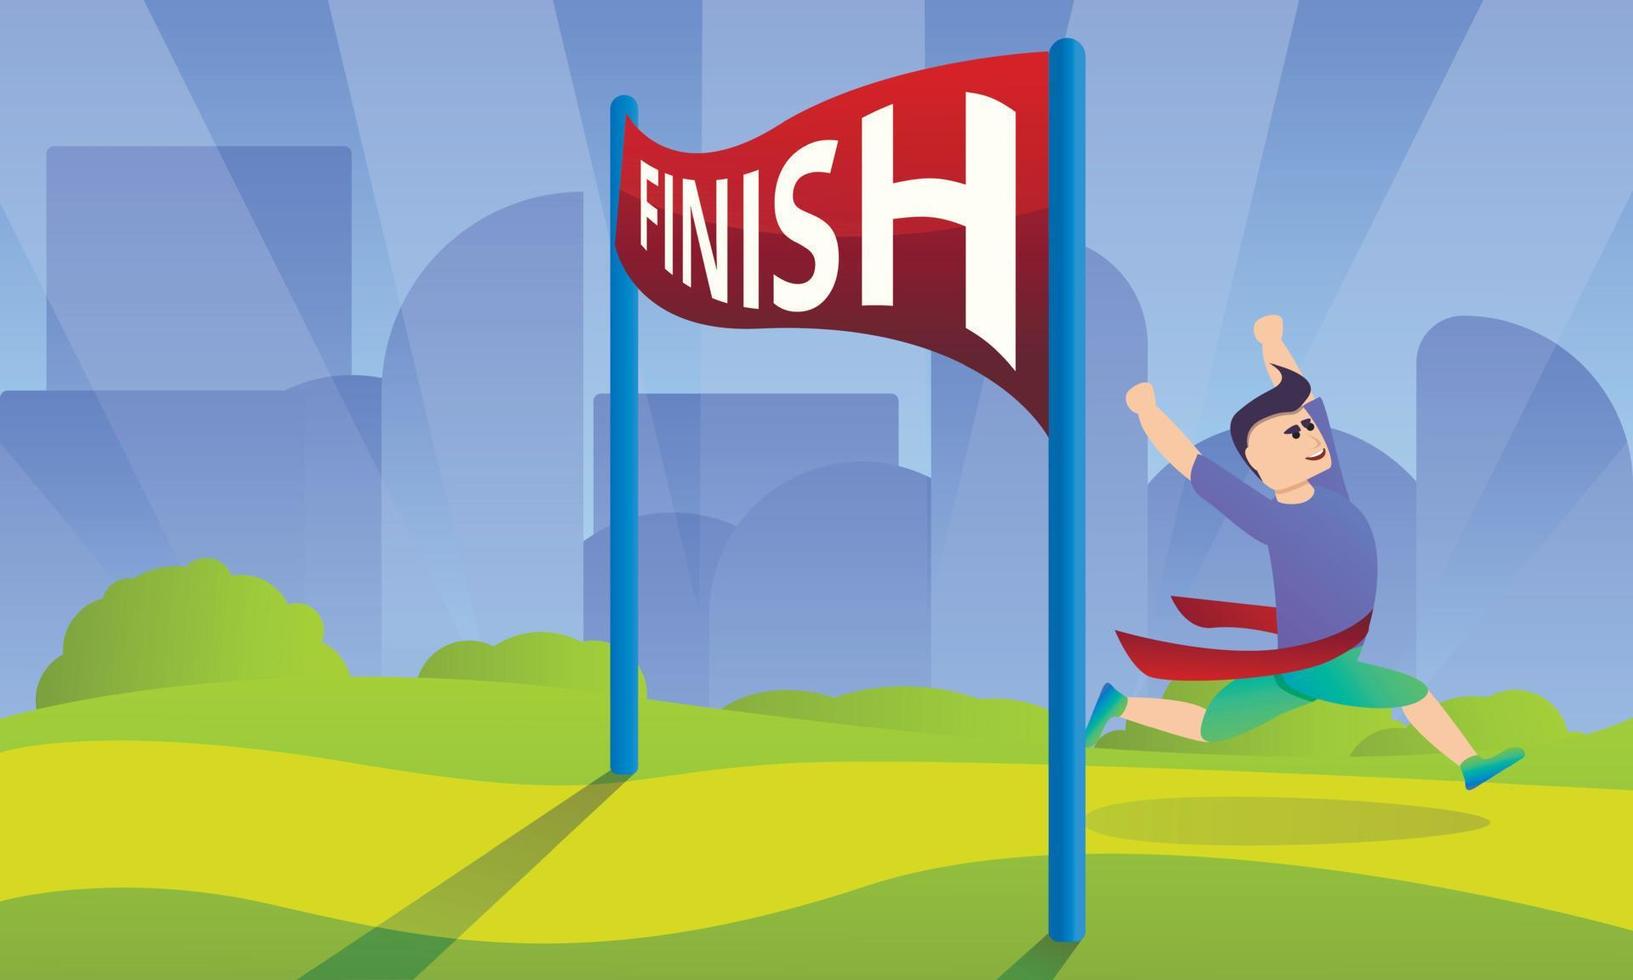 Finish marathon concept background, cartoon style vector